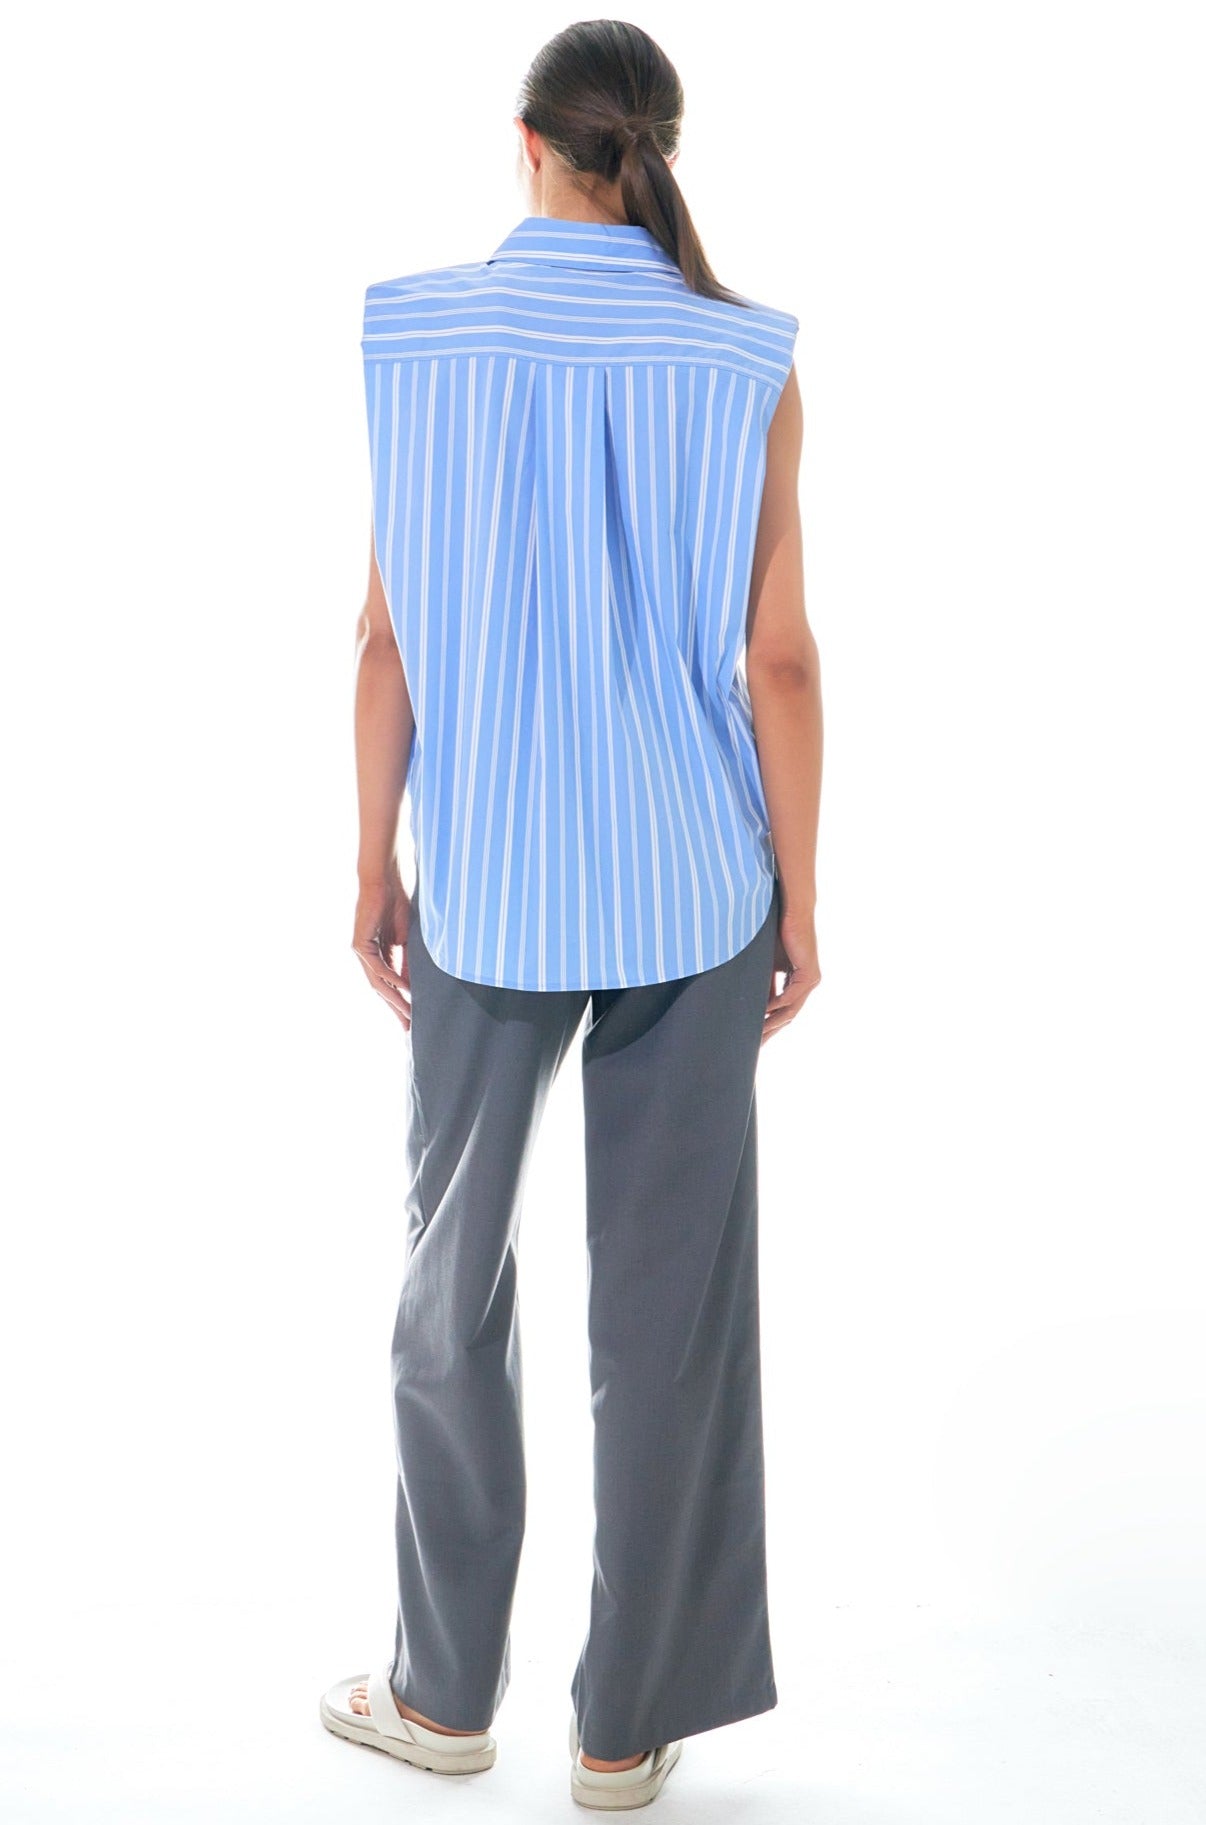 Stripe Power Shoulder Shirt